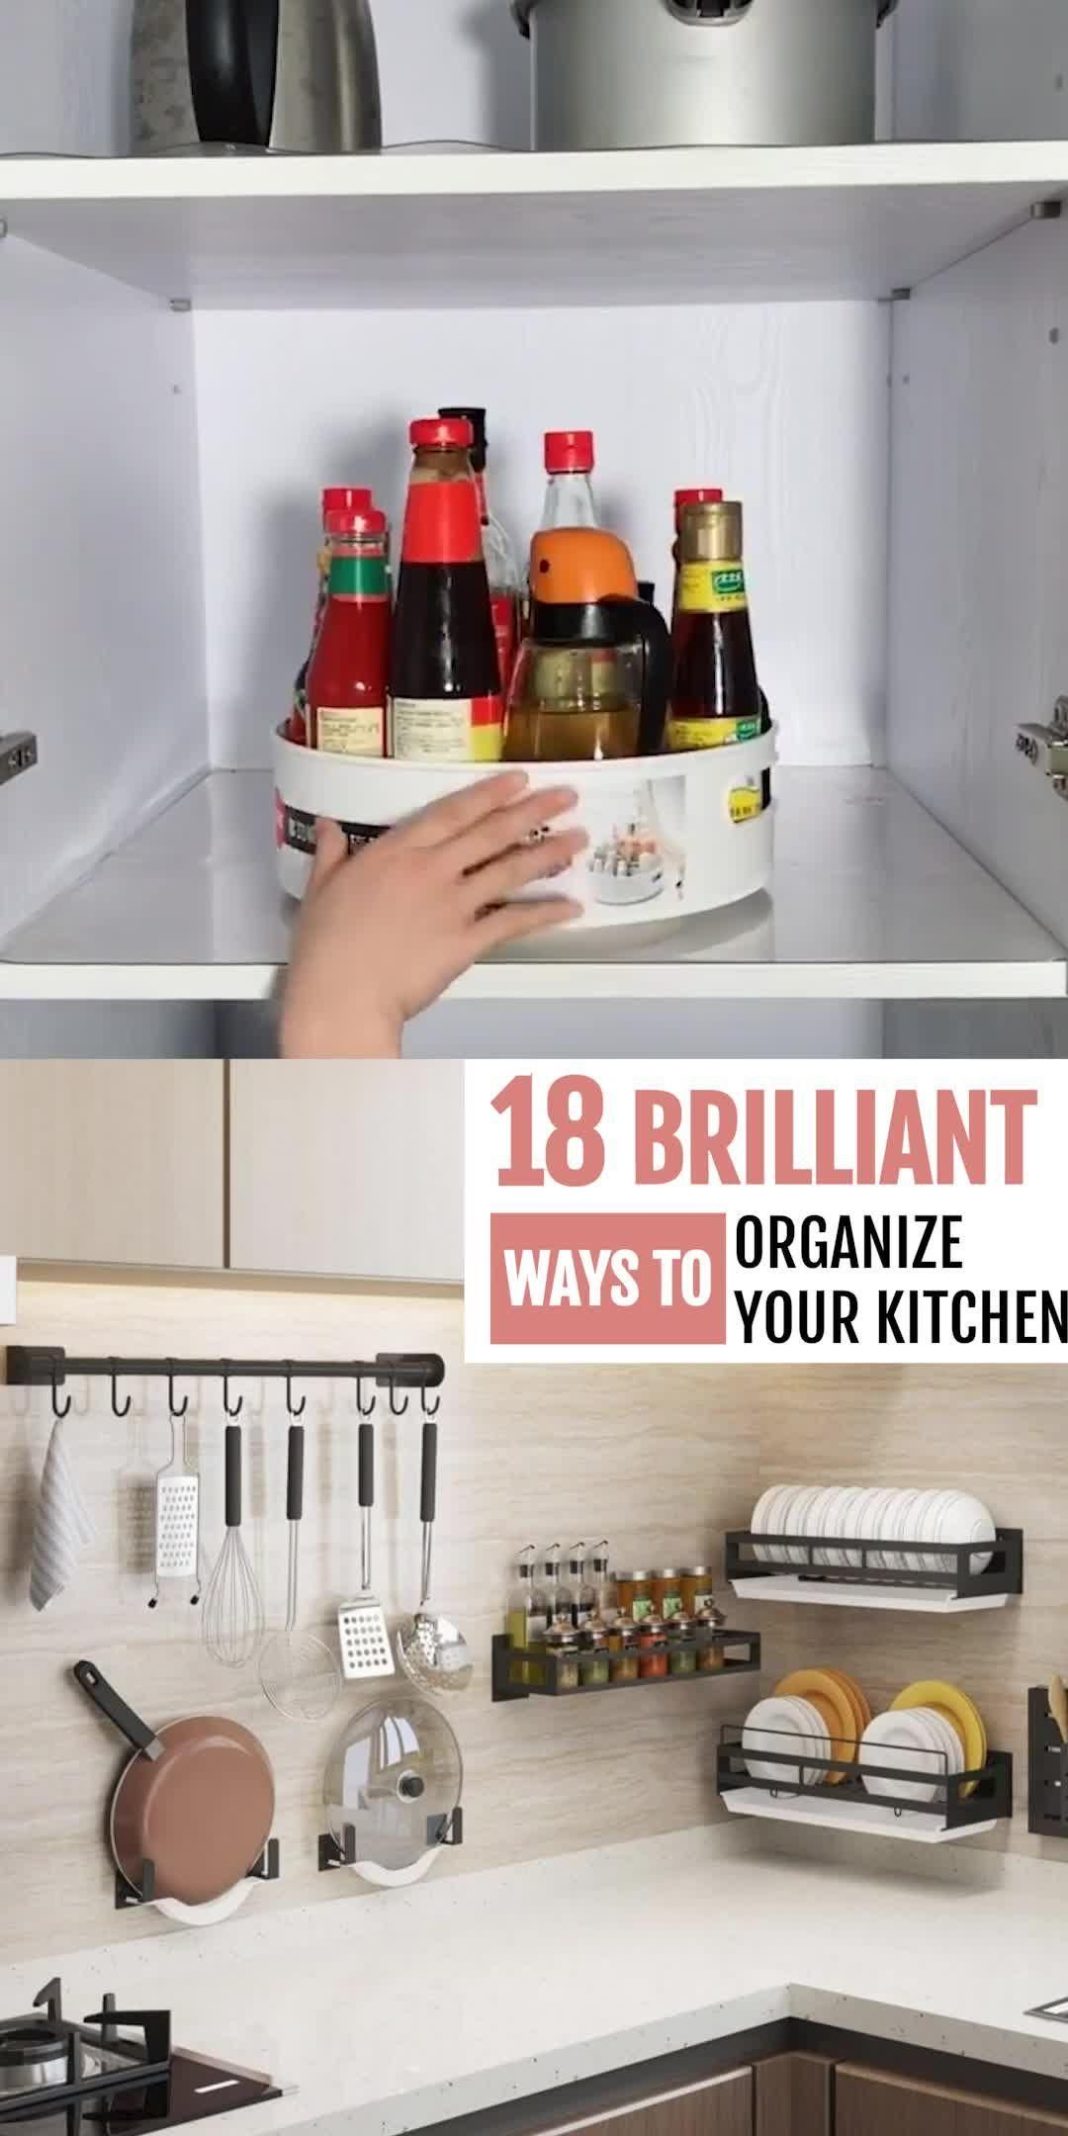 15 Kitchen Organization Ideas (Absolutely Brilliant)